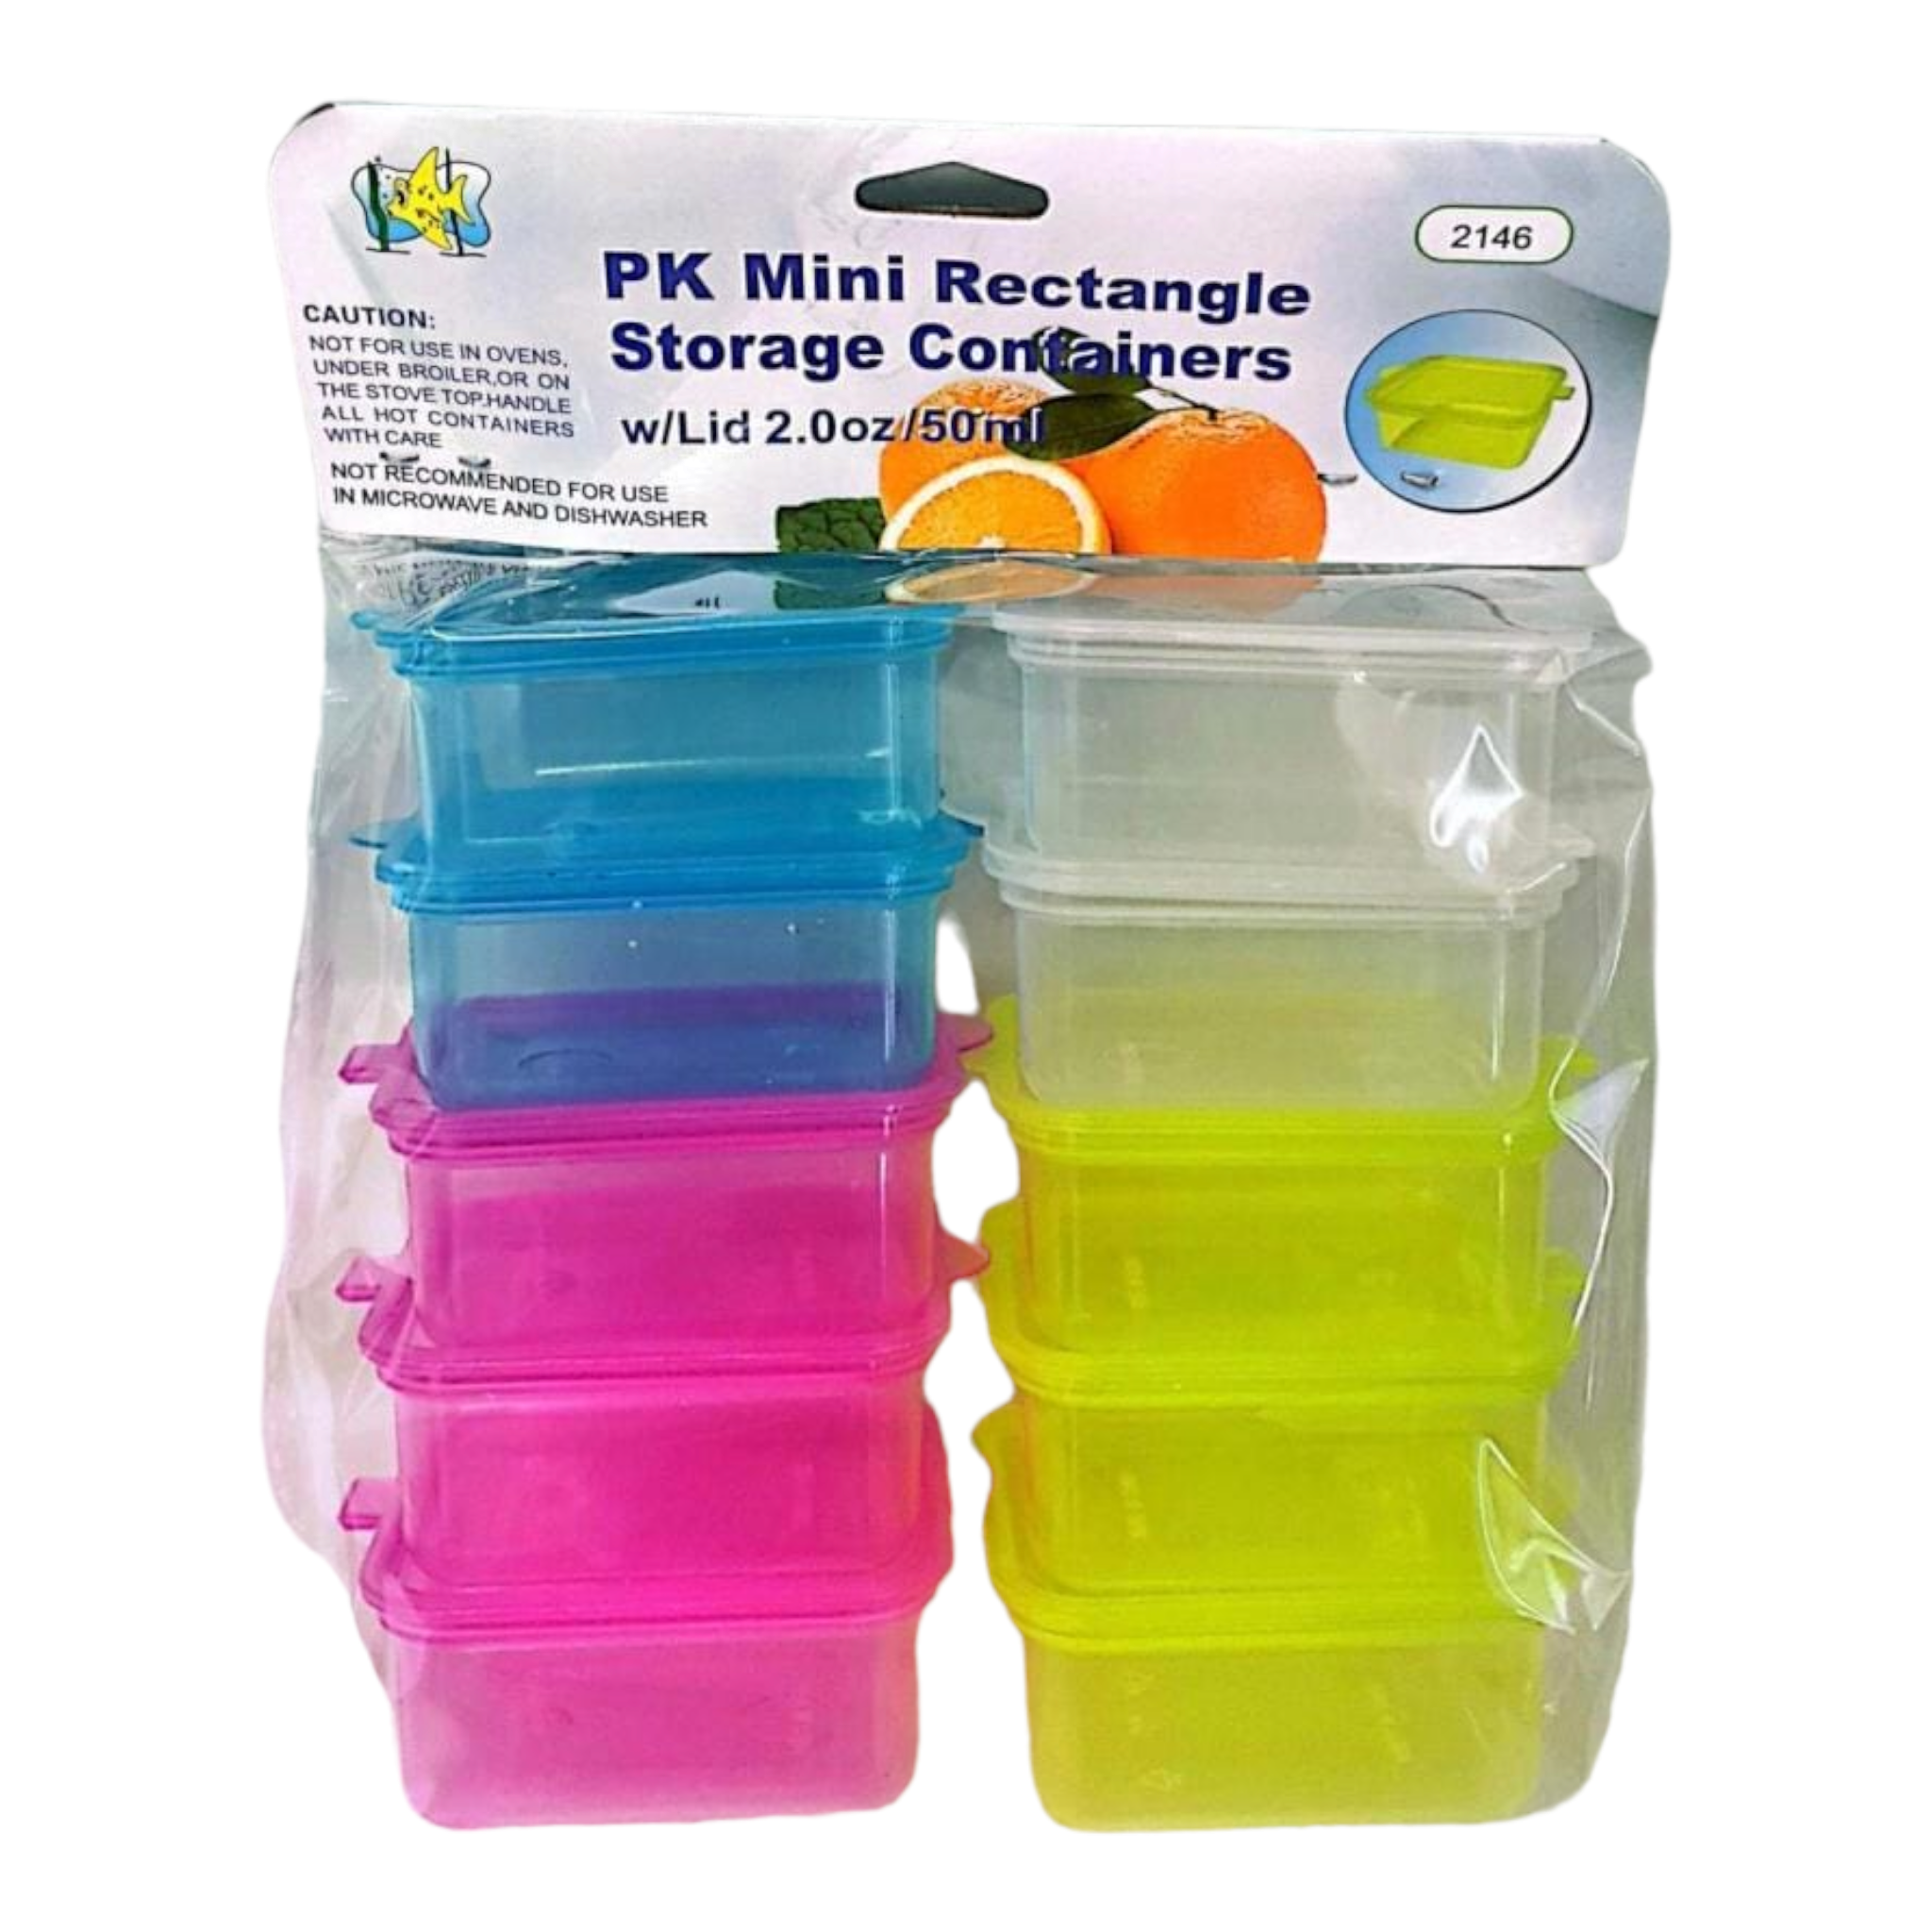 Mini Rectangle Storage Container 10pcs